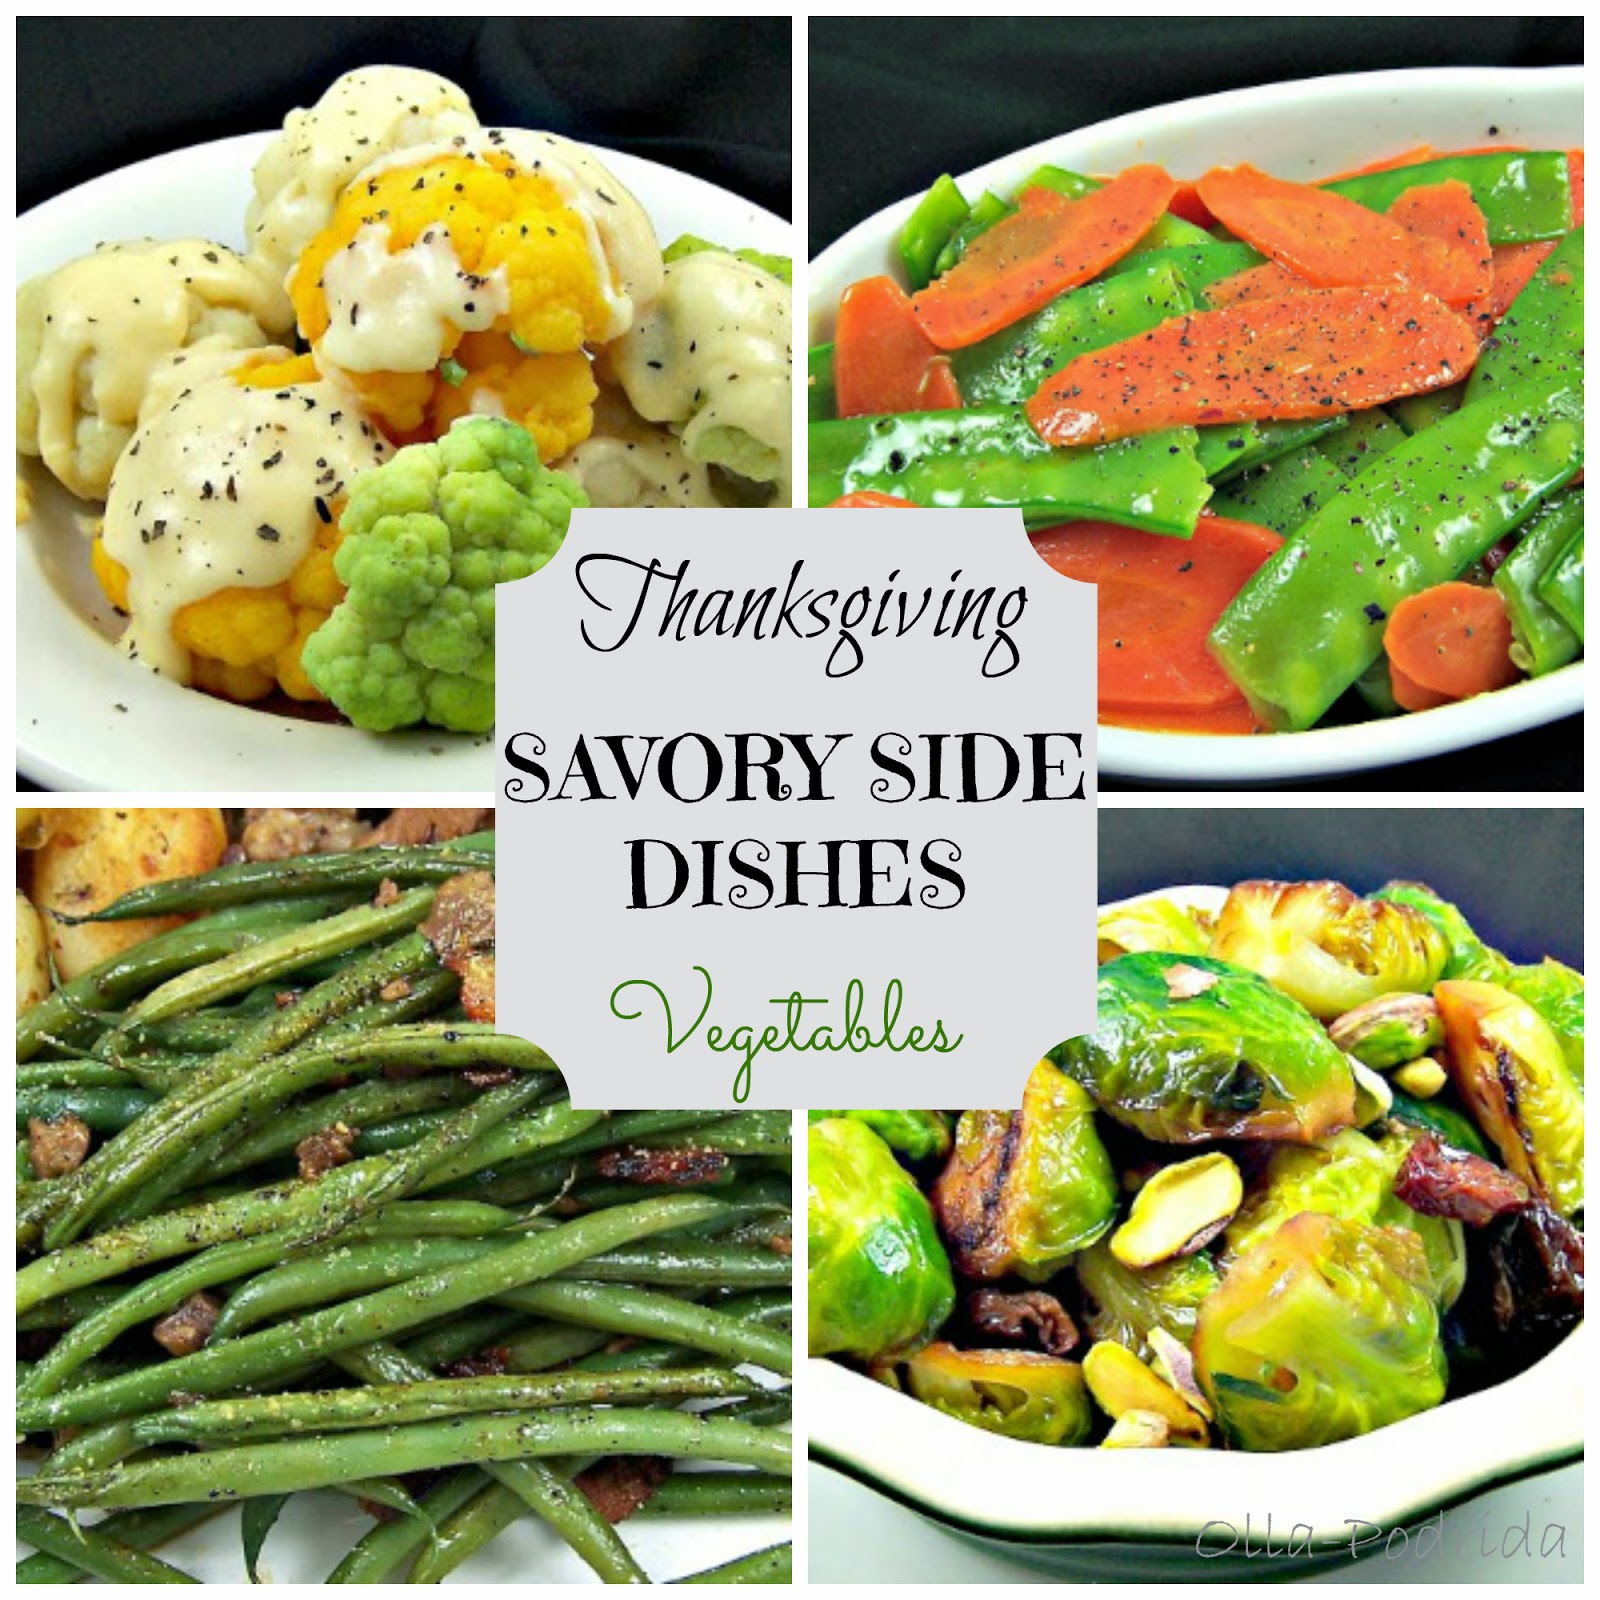 Olla-Podrida: Thanksgiving Savory Side Dishes - Vegetables